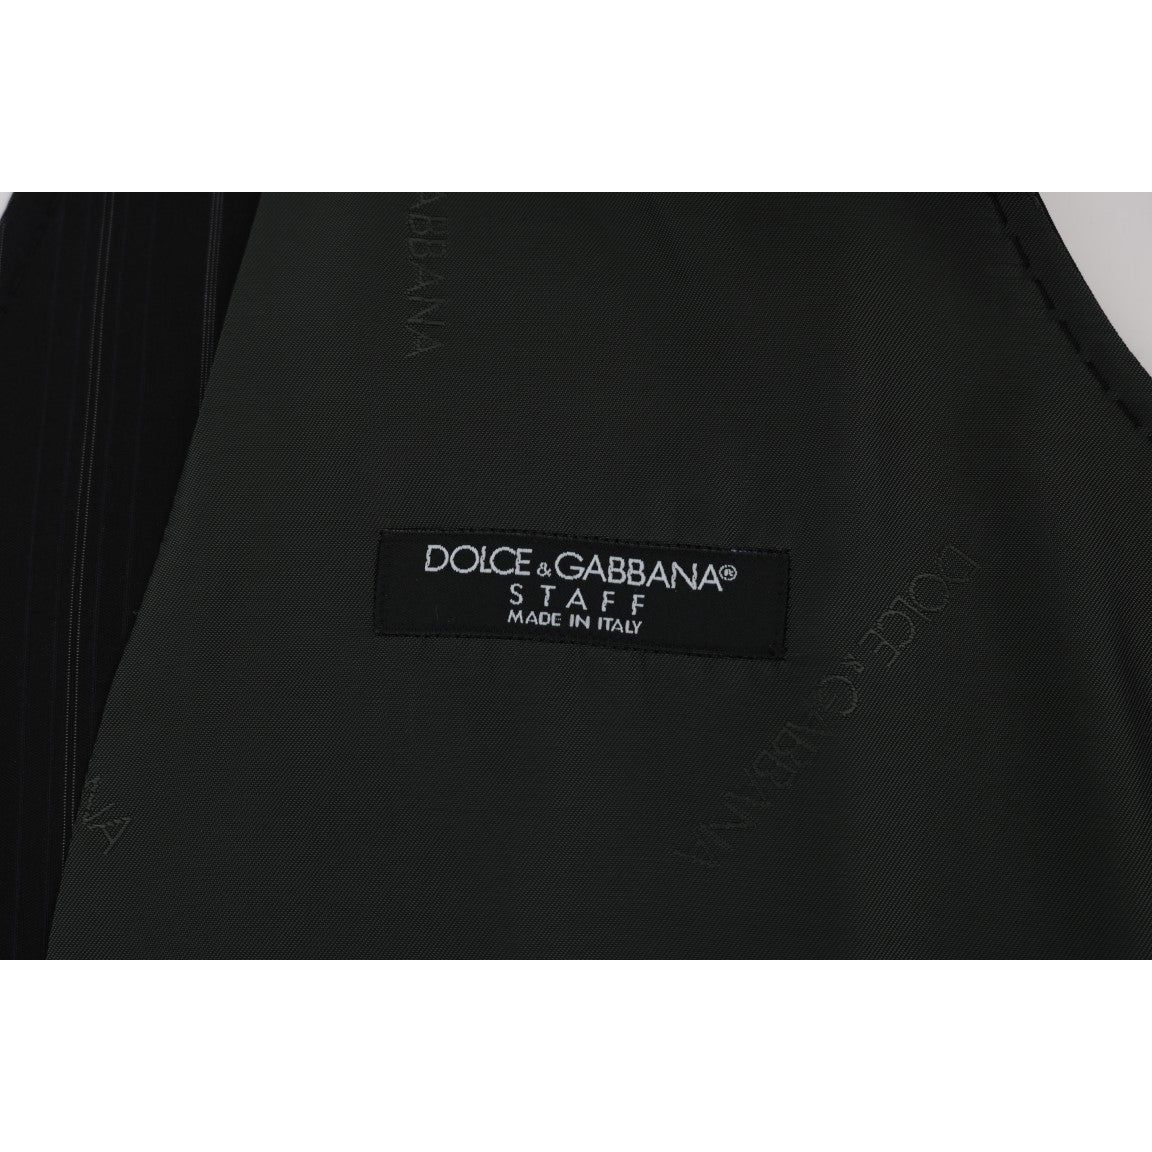 Dolce & Gabbana Elegant Striped Vest Waistcoat black-staff-cotton-striped-vest-1 478355-black-staff-cotton-striped-vest-2-5.jpg